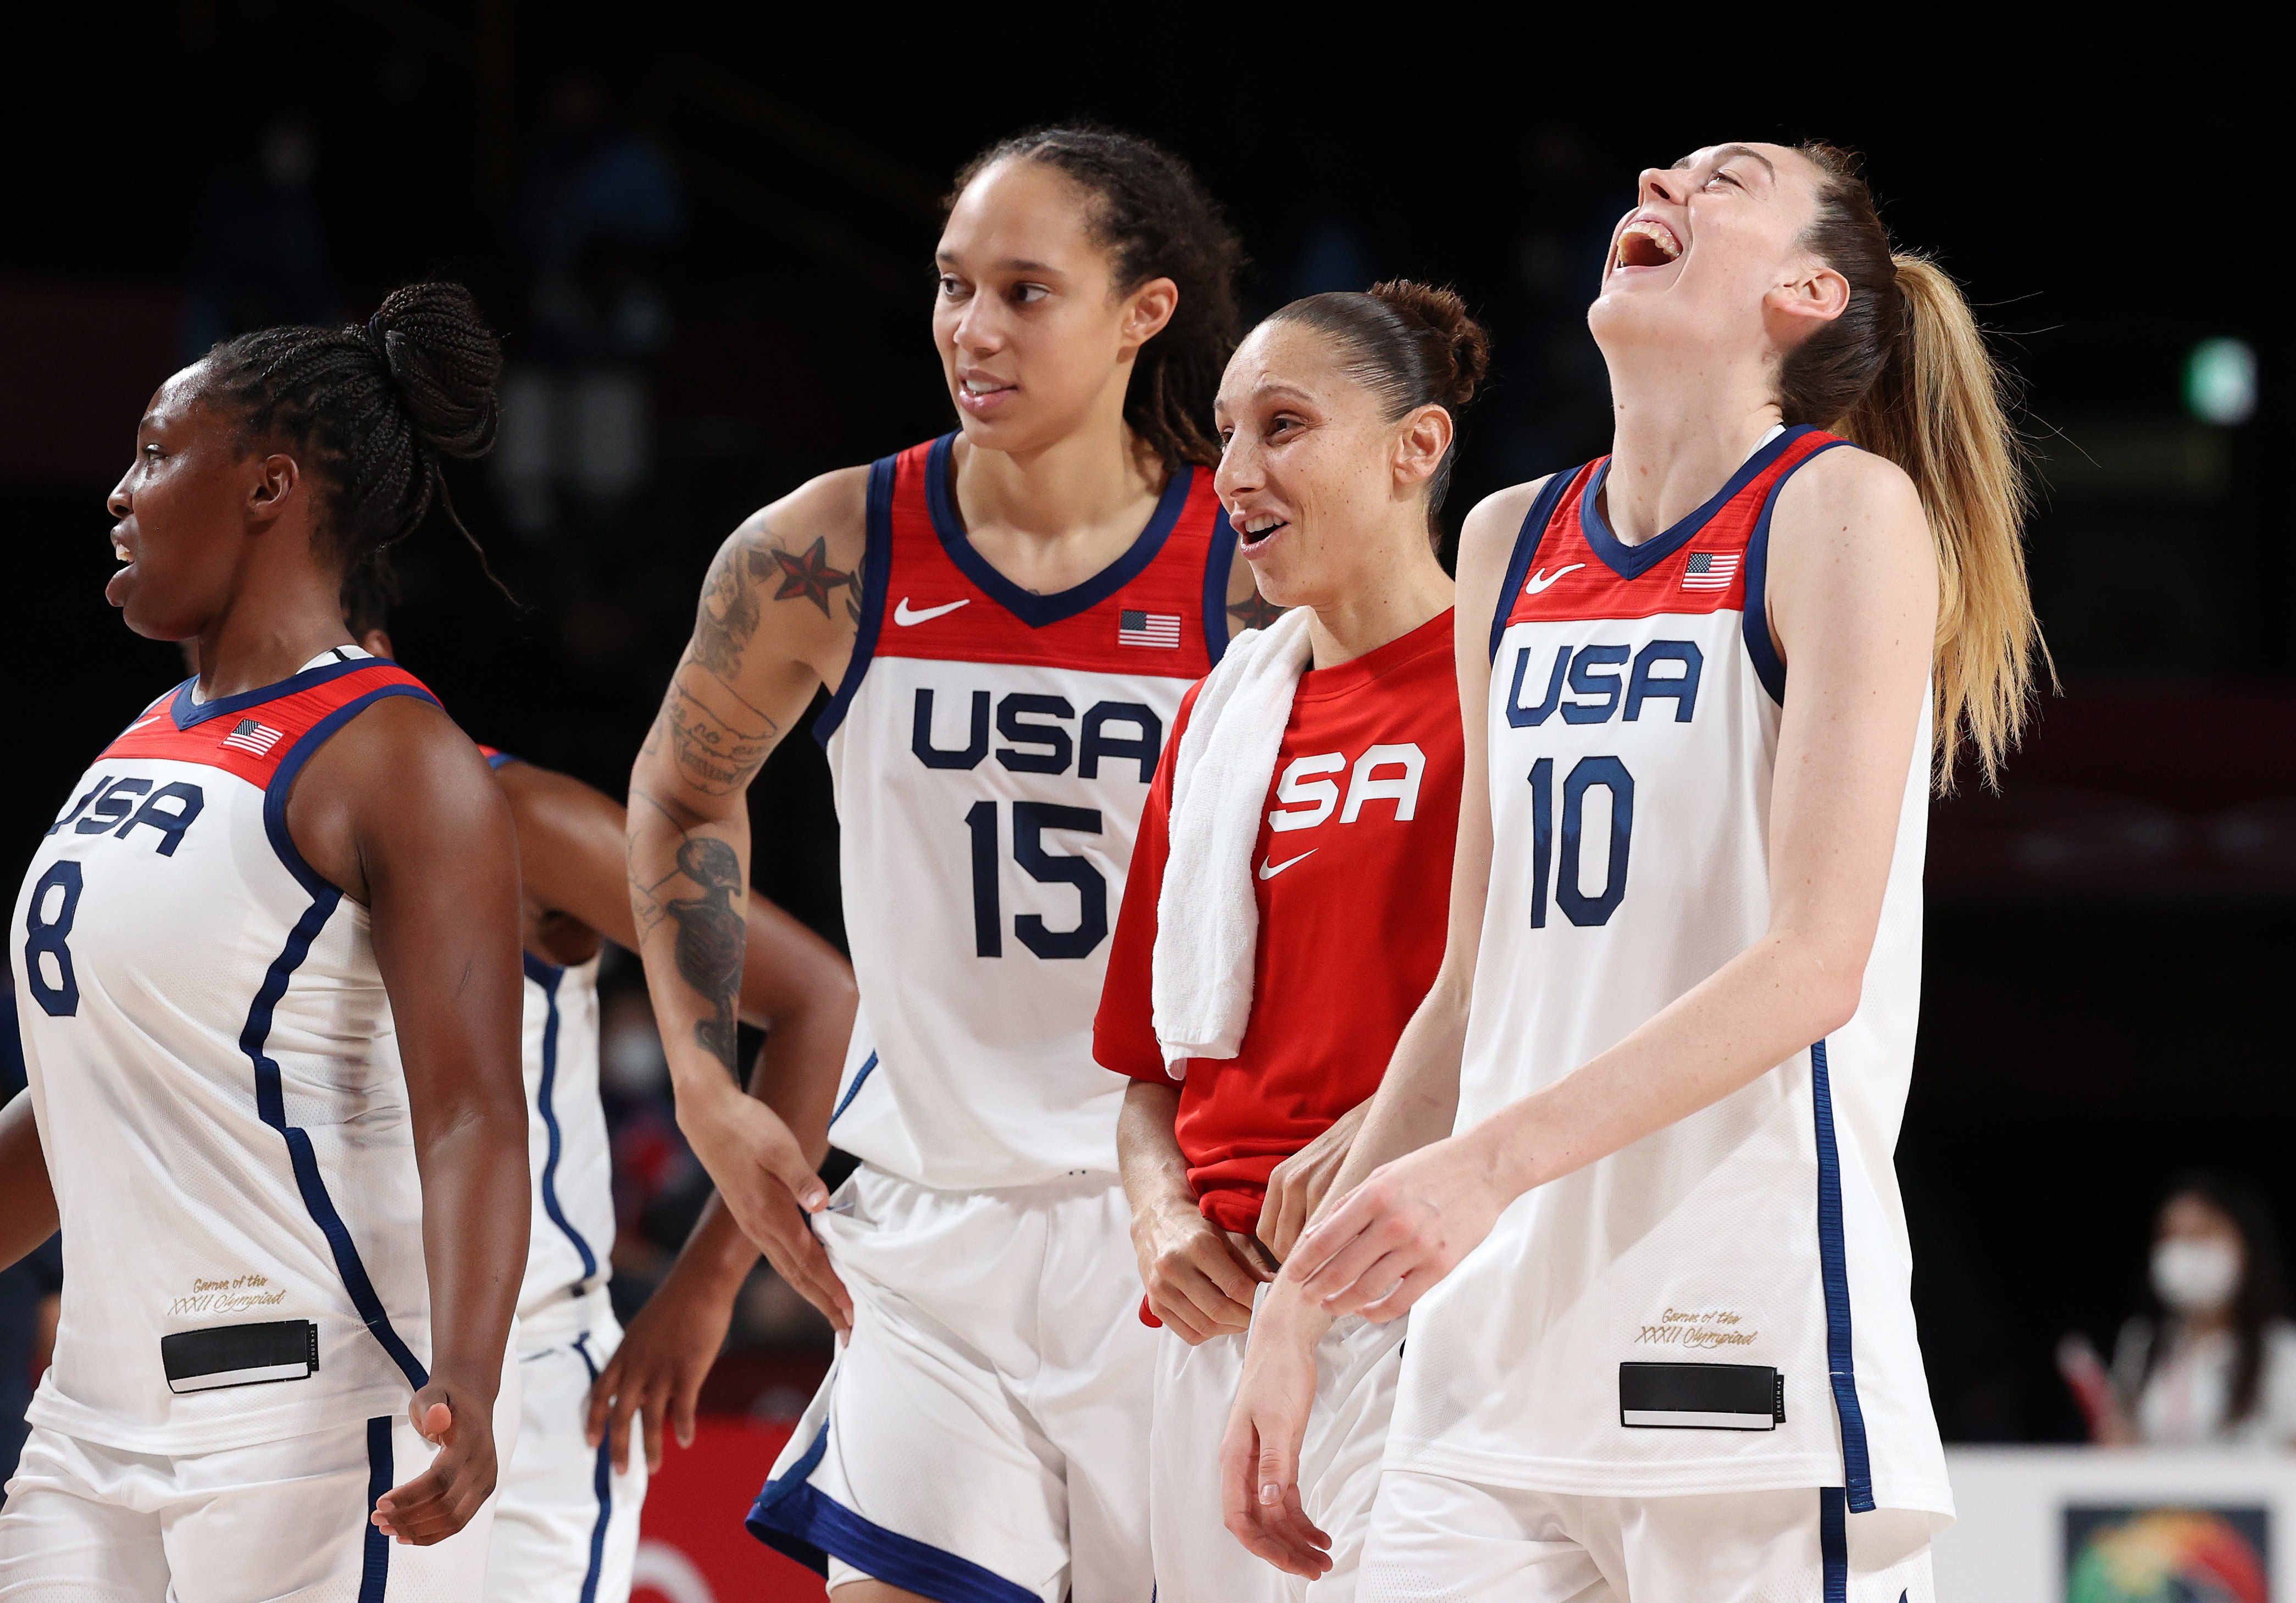 Https www contest. Сборная США женщины по баскетбол 2020. Сборная США 2013 баскетбол. Сборная США по баскетболу 2023.